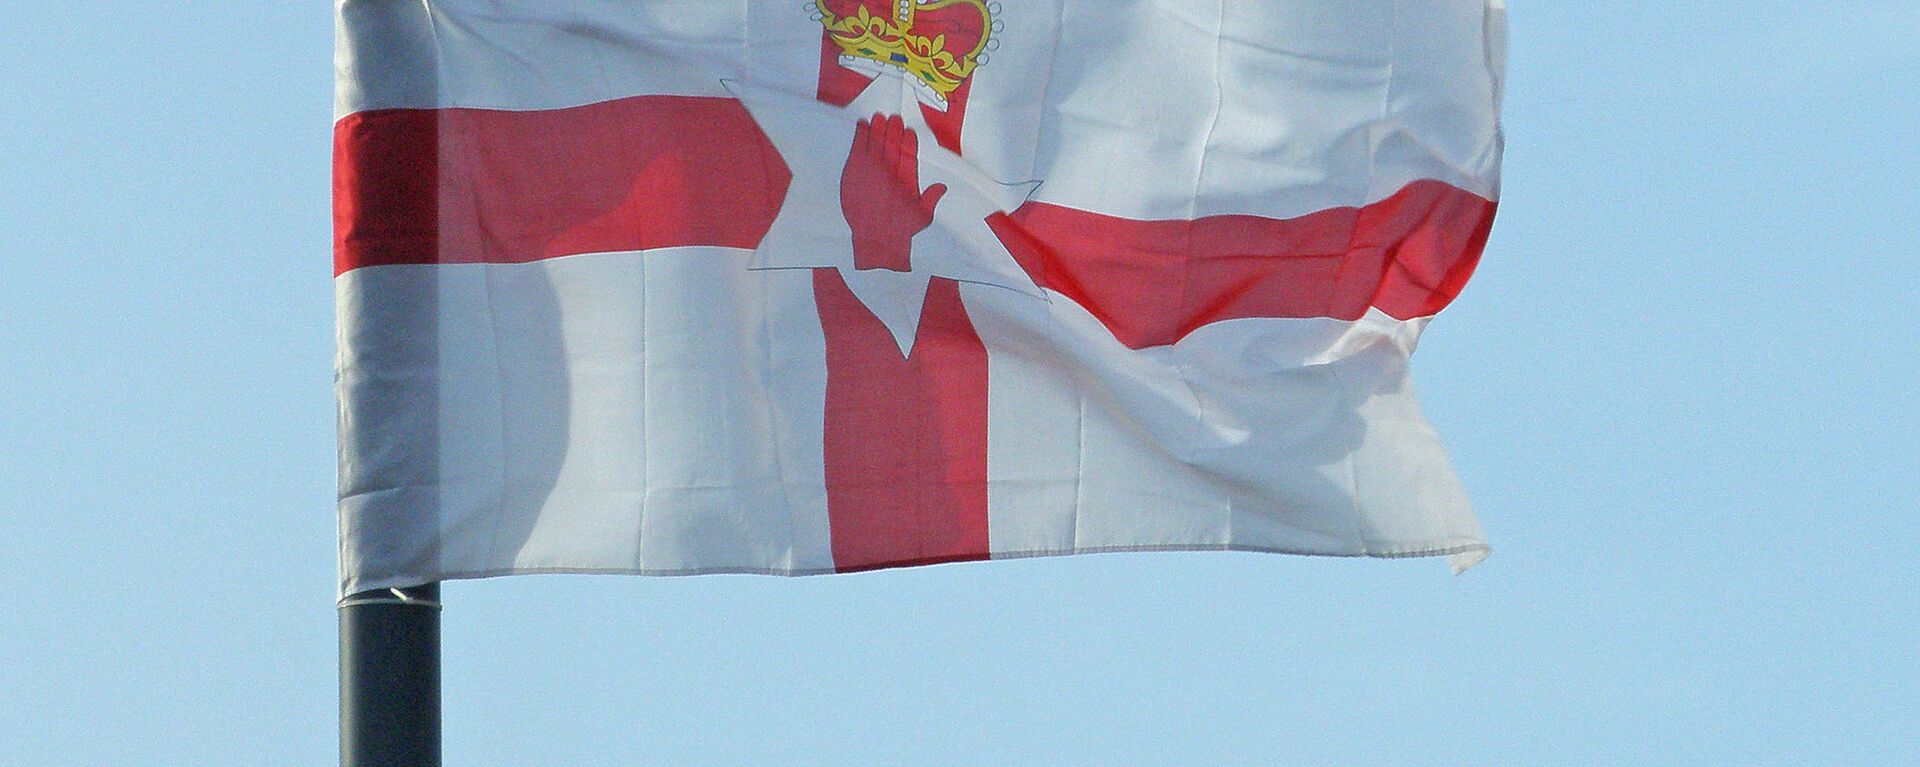 Bandera de Irlanda del Norte - Sputnik Mundo, 1920, 09.04.2021